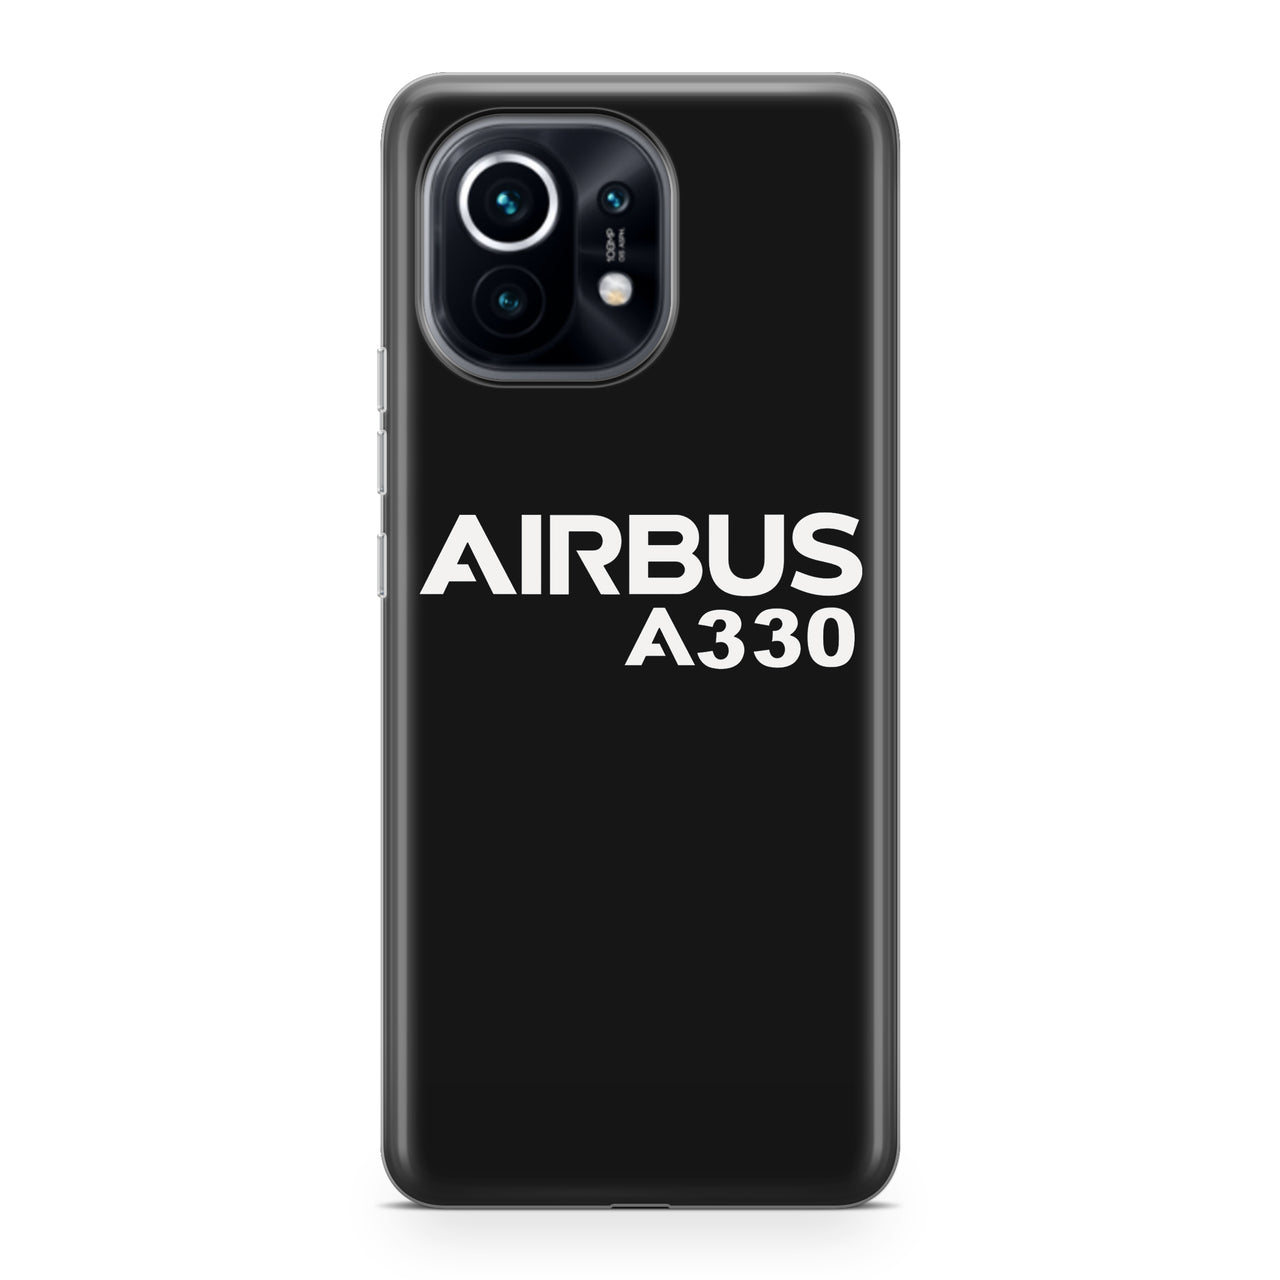 Airbus A330 & Text Designed Xiaomi Cases